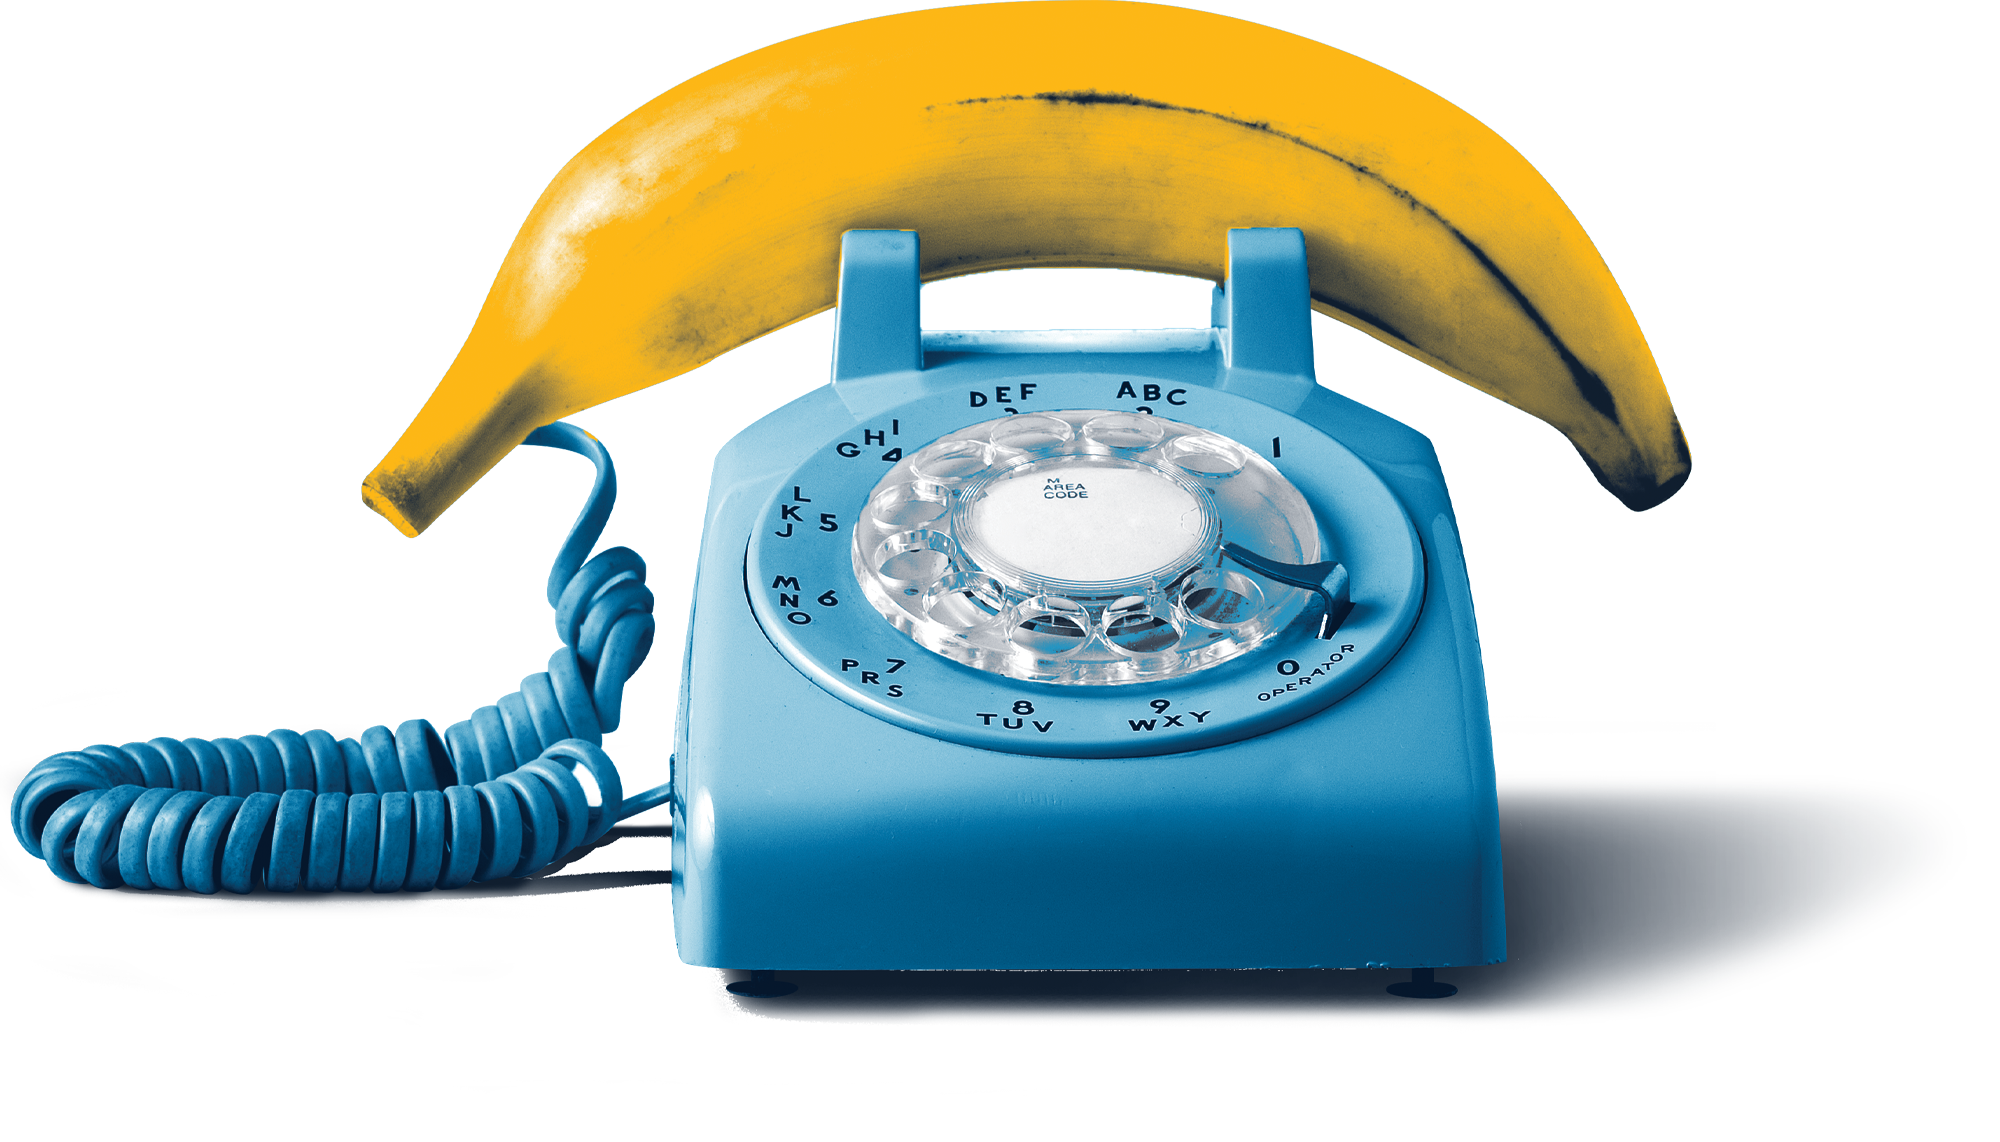 growl-banana-phone